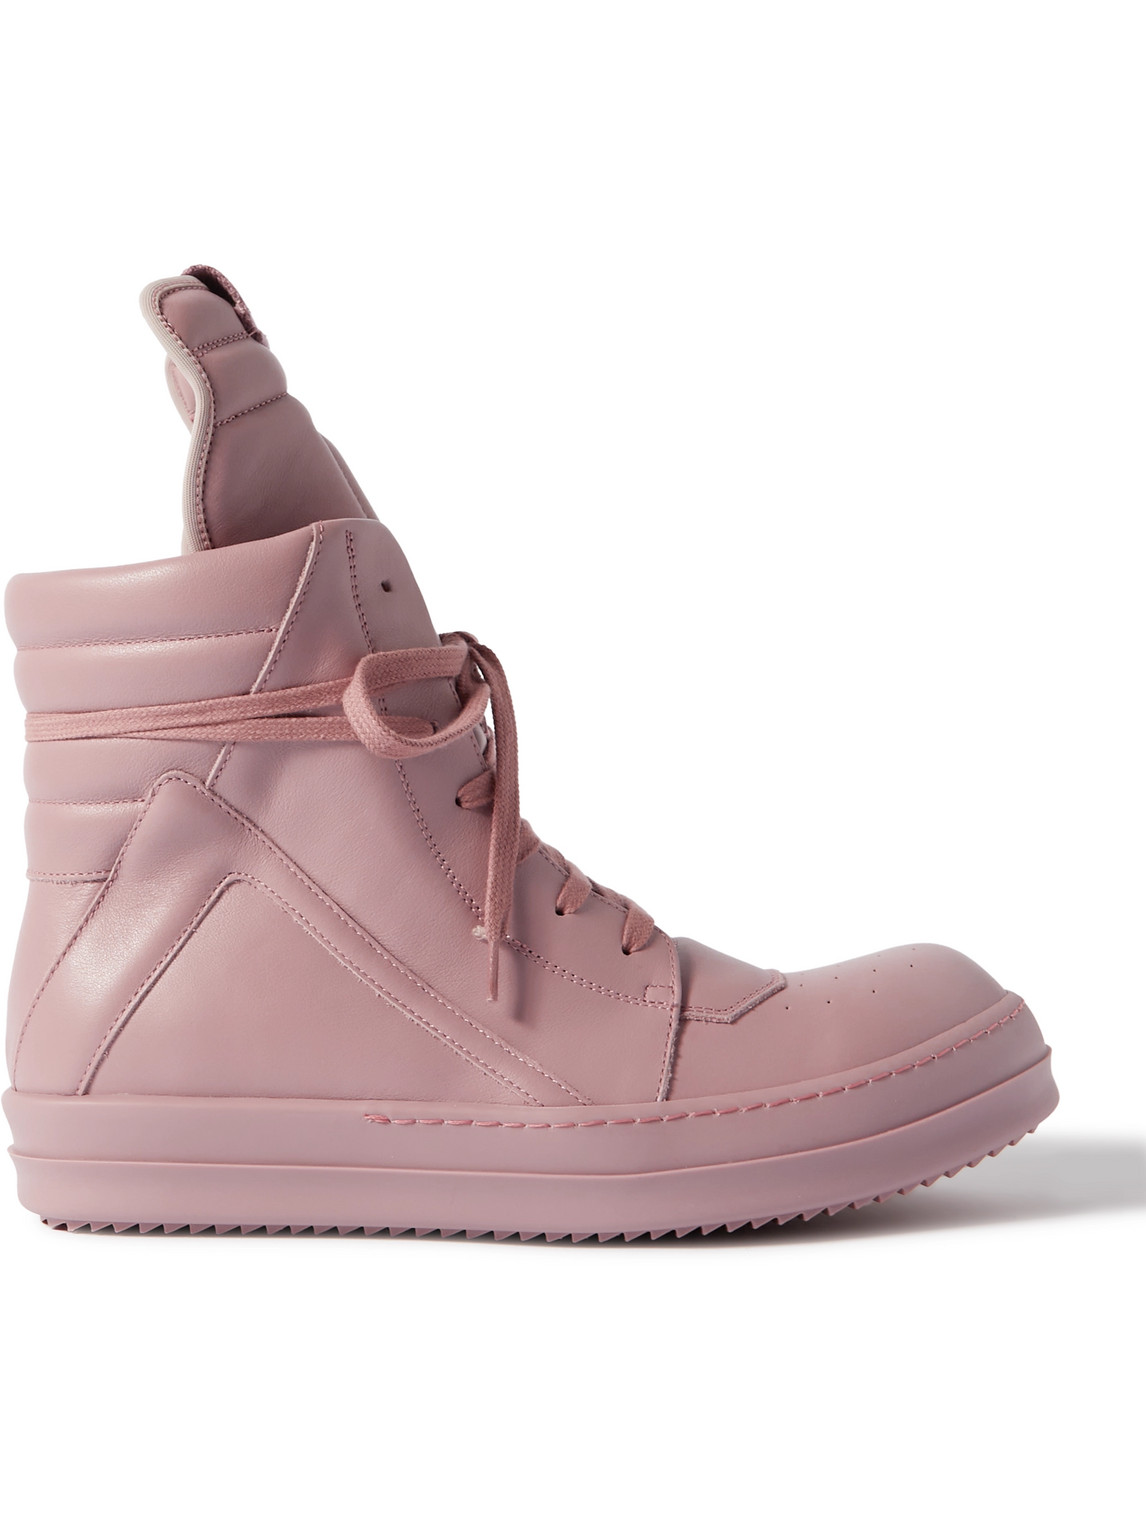 Rick Owens Geobasket Leather High-top Sneakers In 636363 Dusty Pink/du